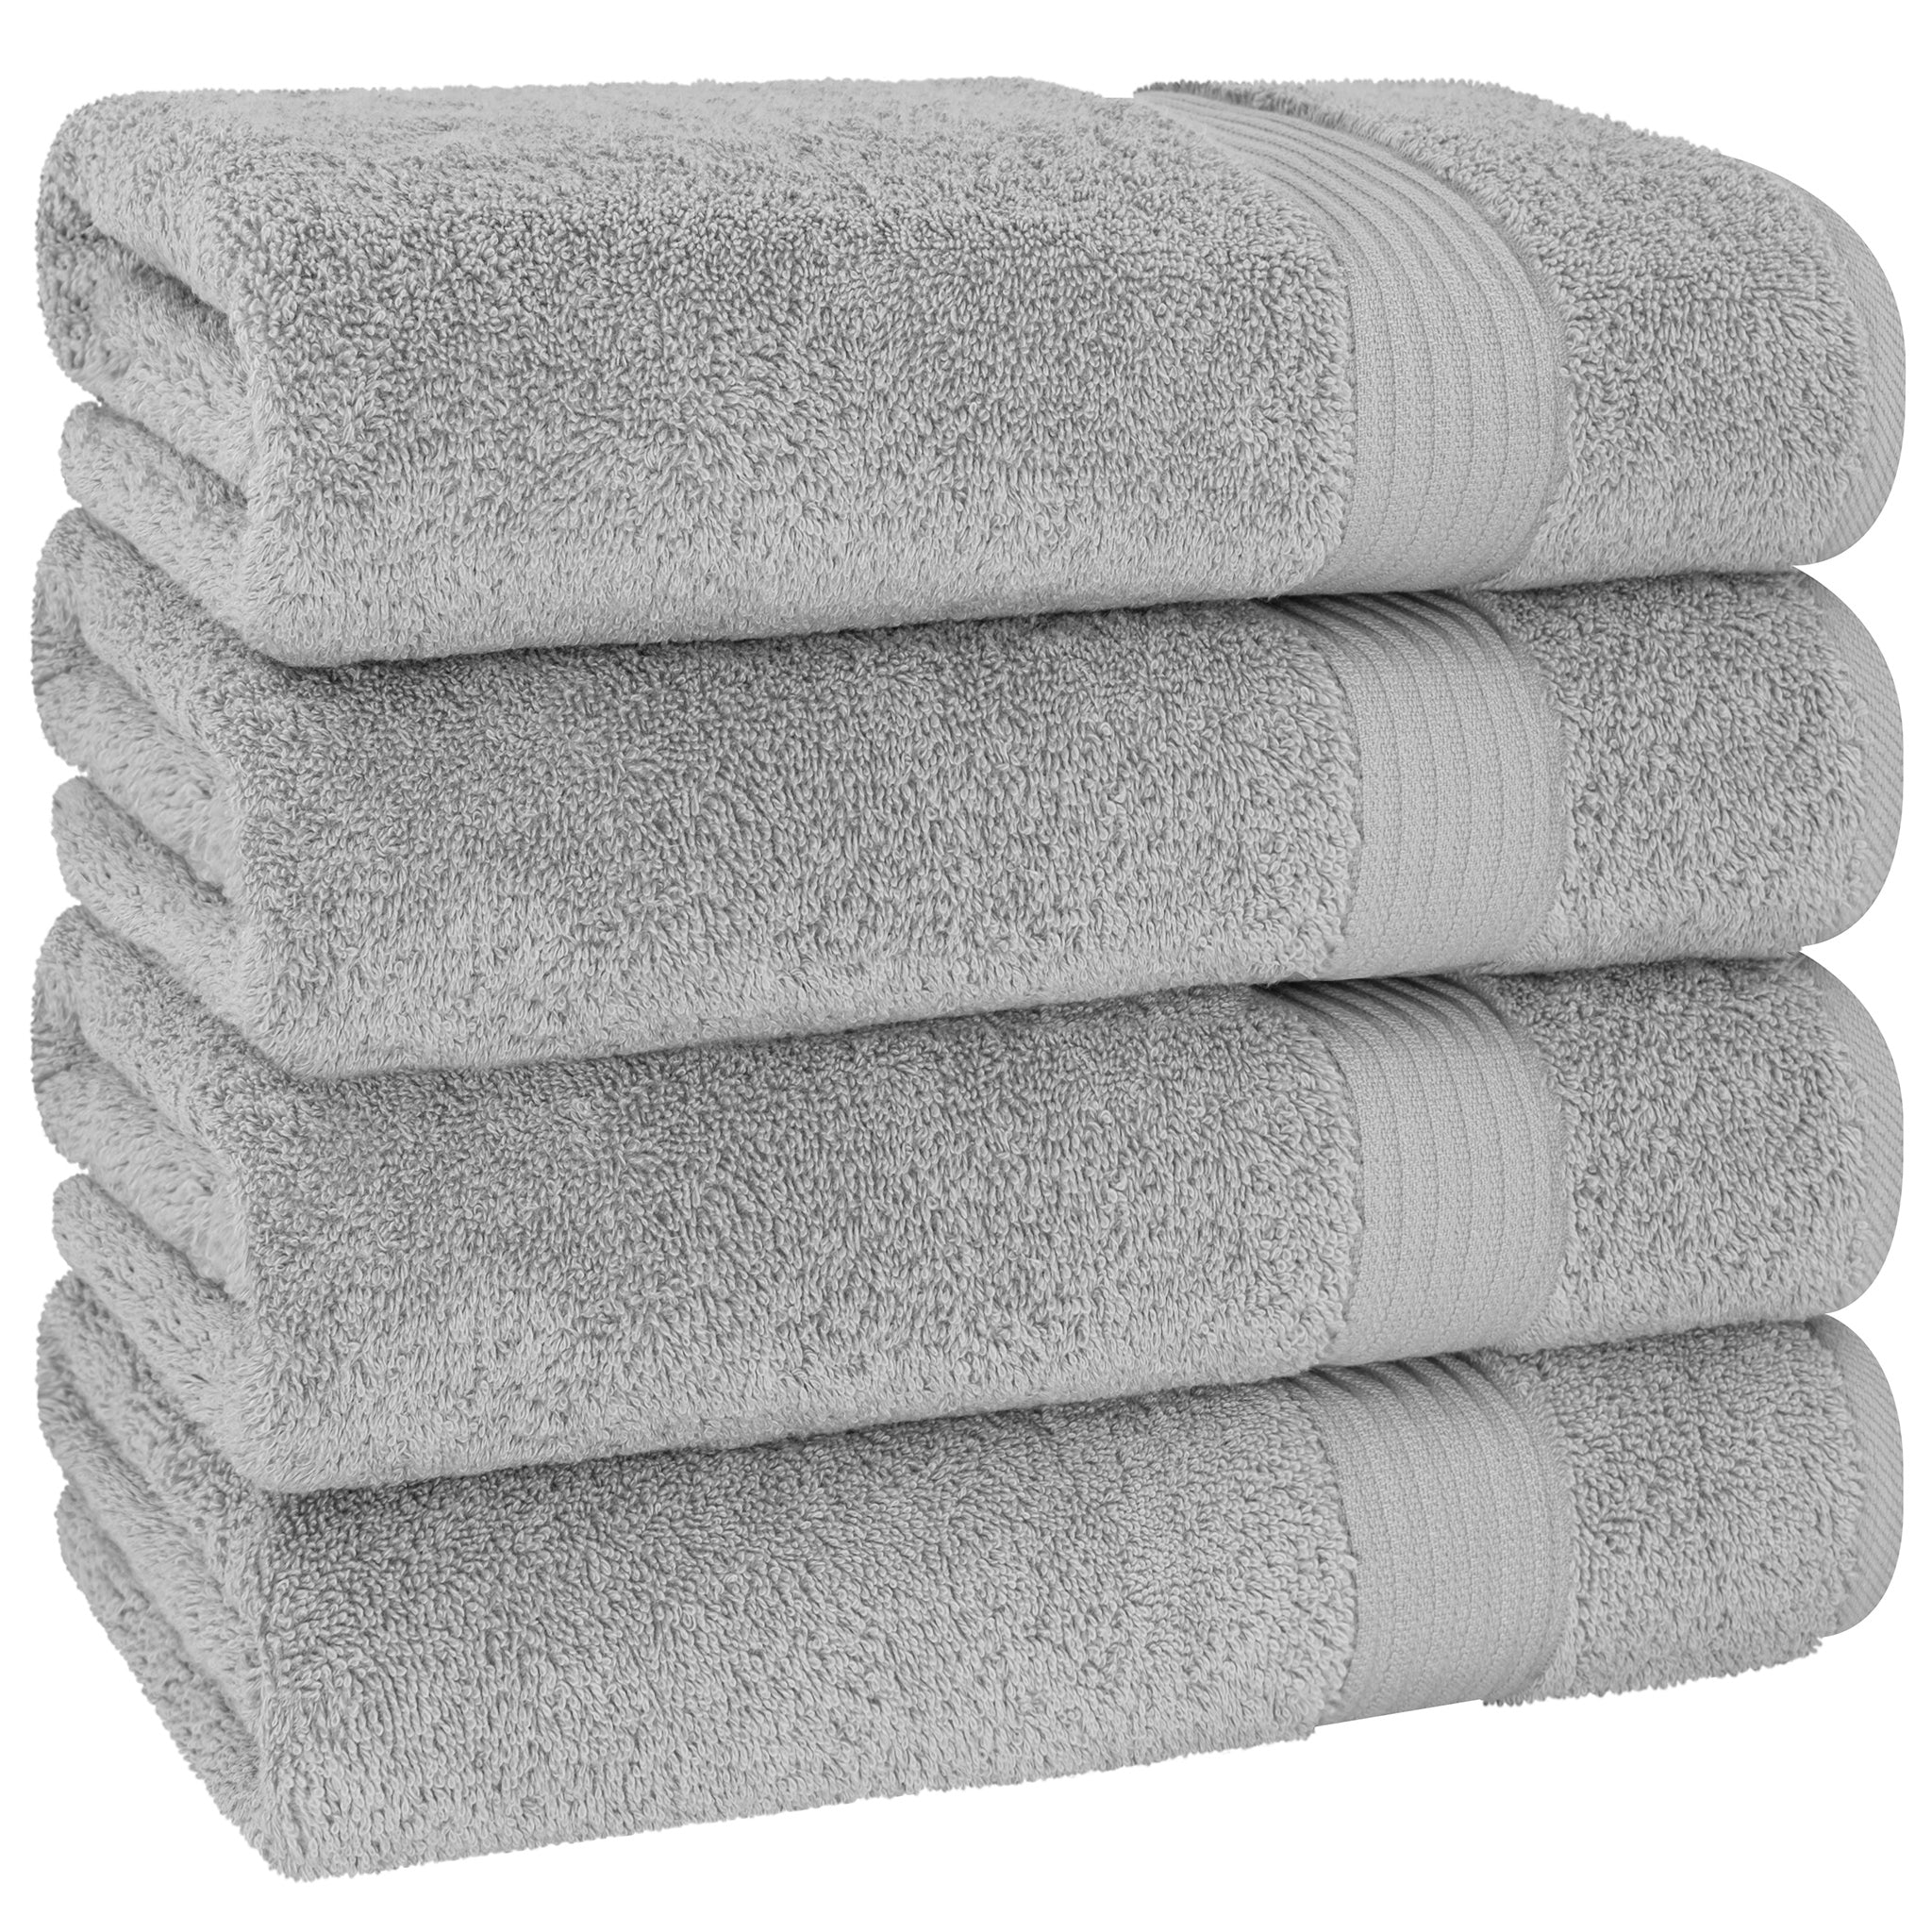 American Soft Linen Bekos 100% Cotton Turkish Towels, 4 Piece Bath Towel Set -rockridge-gray-05